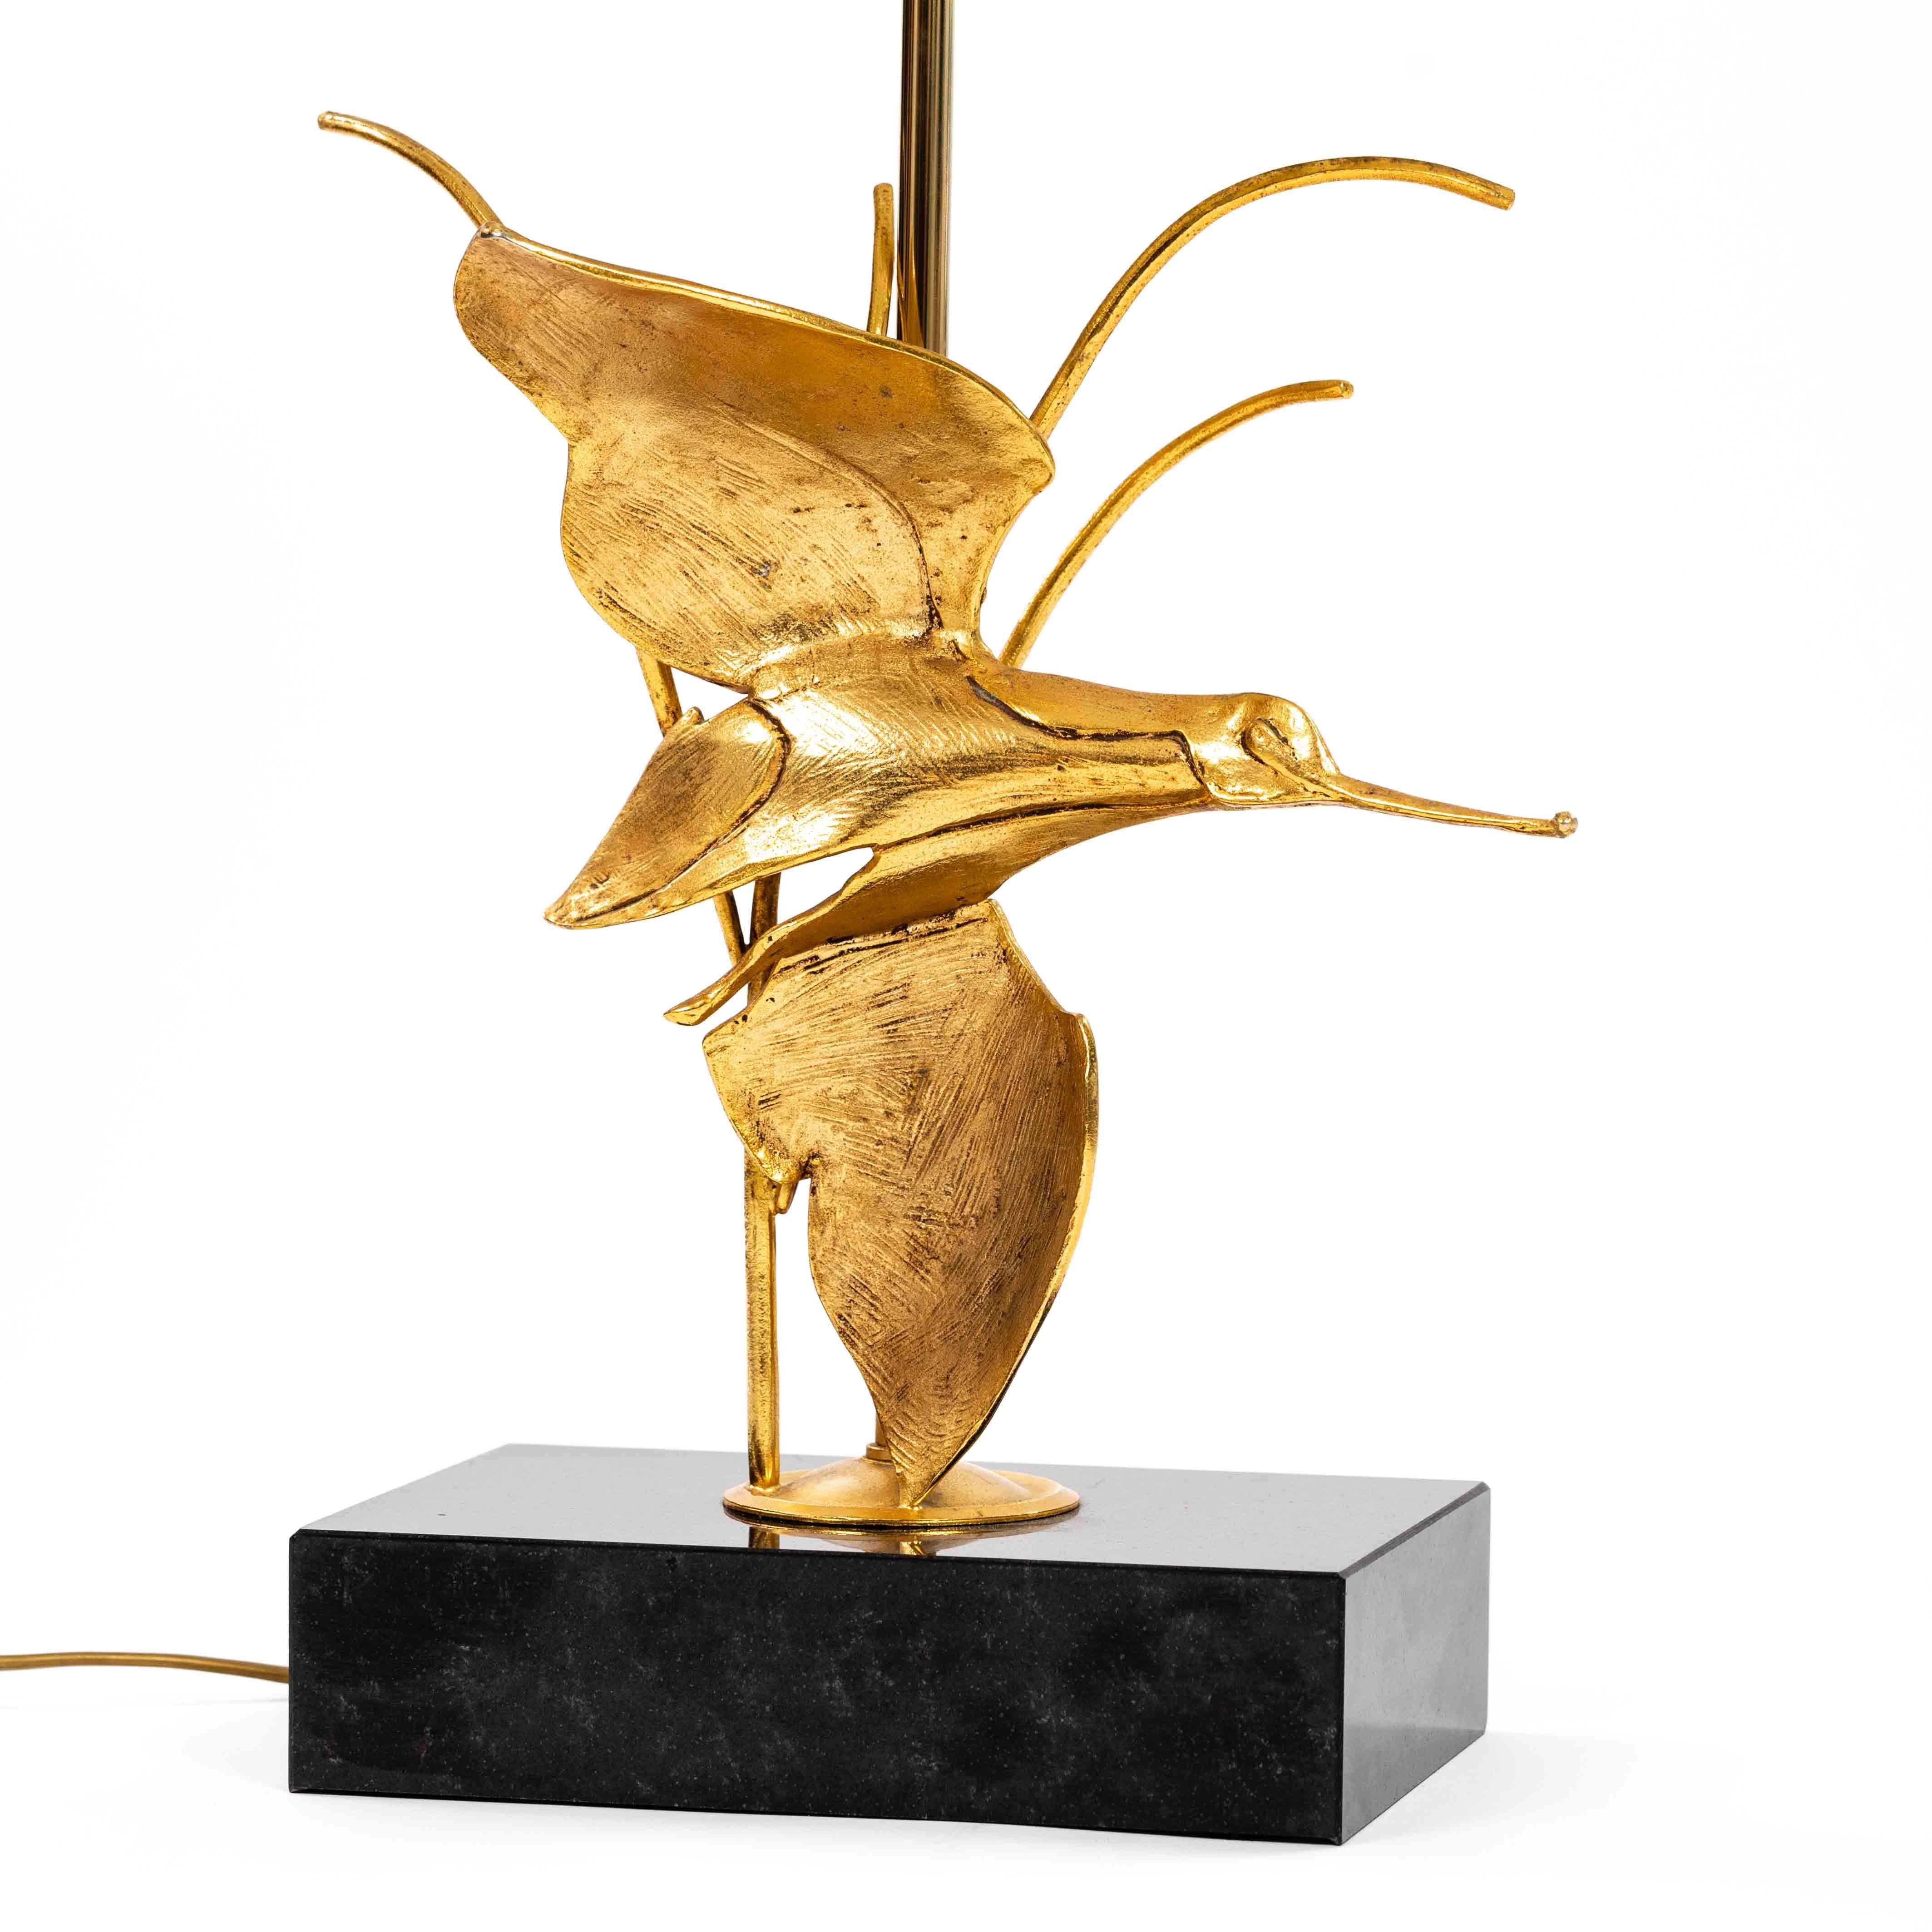 Italian Midcentury Gilded Brass Bird Table Lamp by GM Italia 1950s For Sale 1